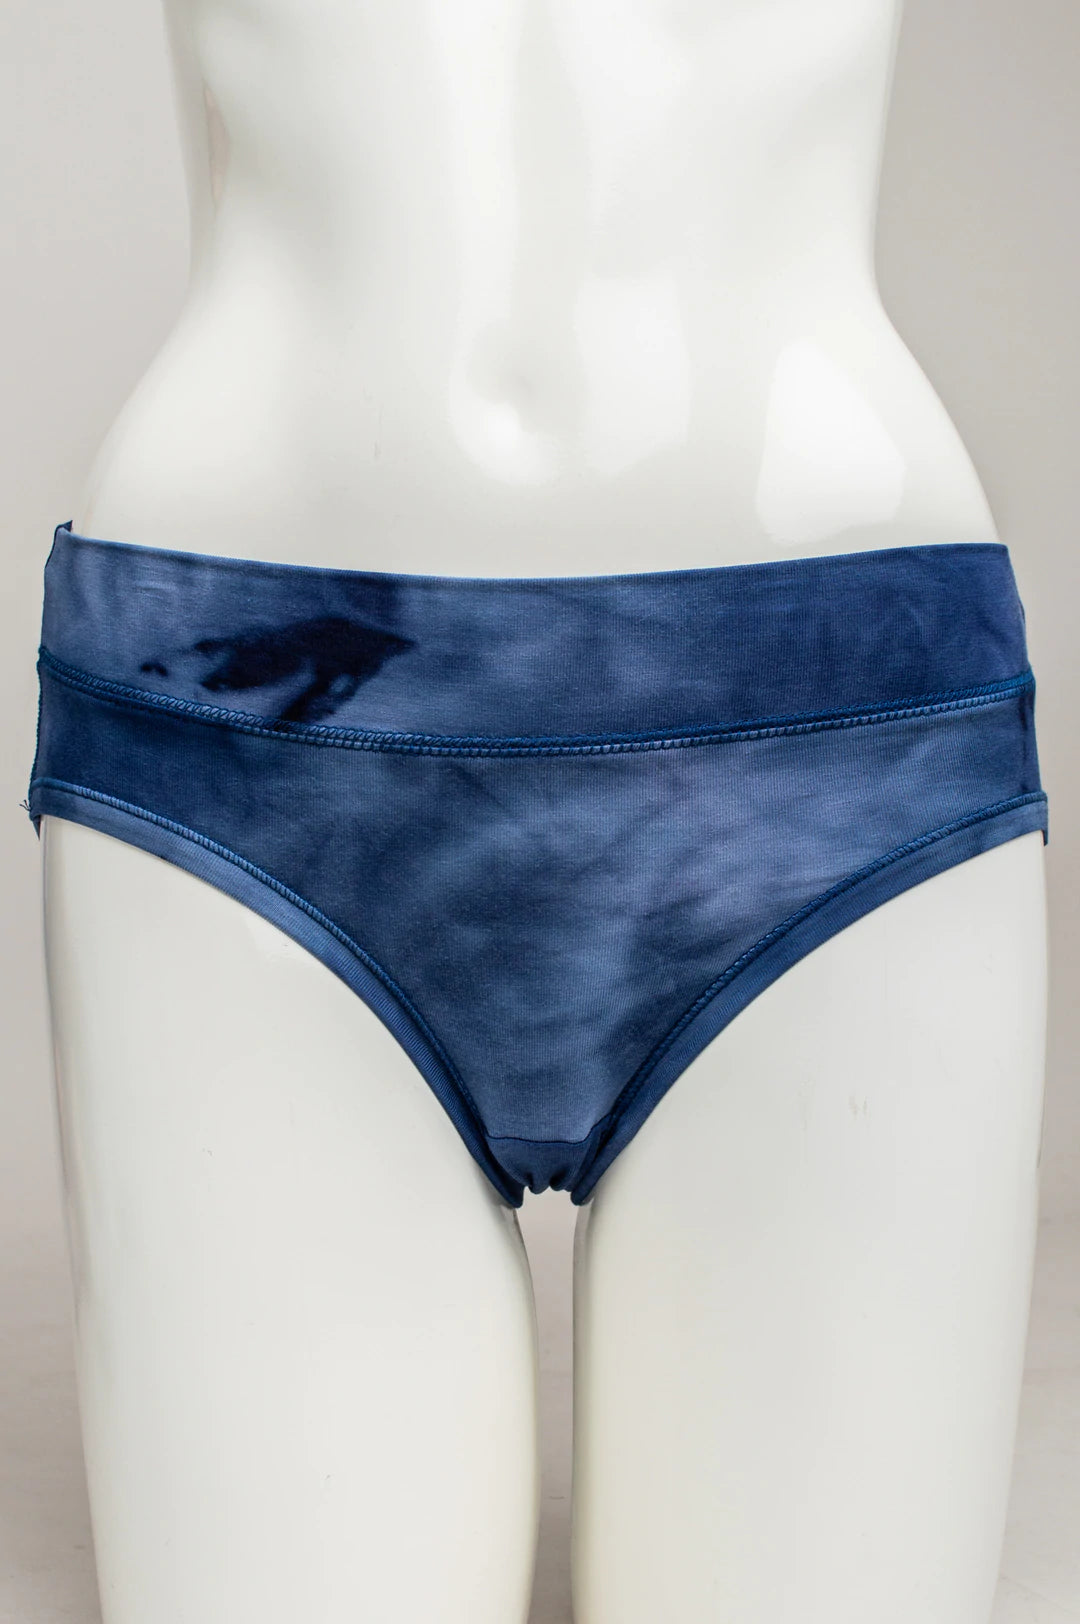 nsendm Womens Lace Trim Seamless Sheer Panties Briefs Cotton Crotch plus  Size Underwear Underpants Khaki Medium 